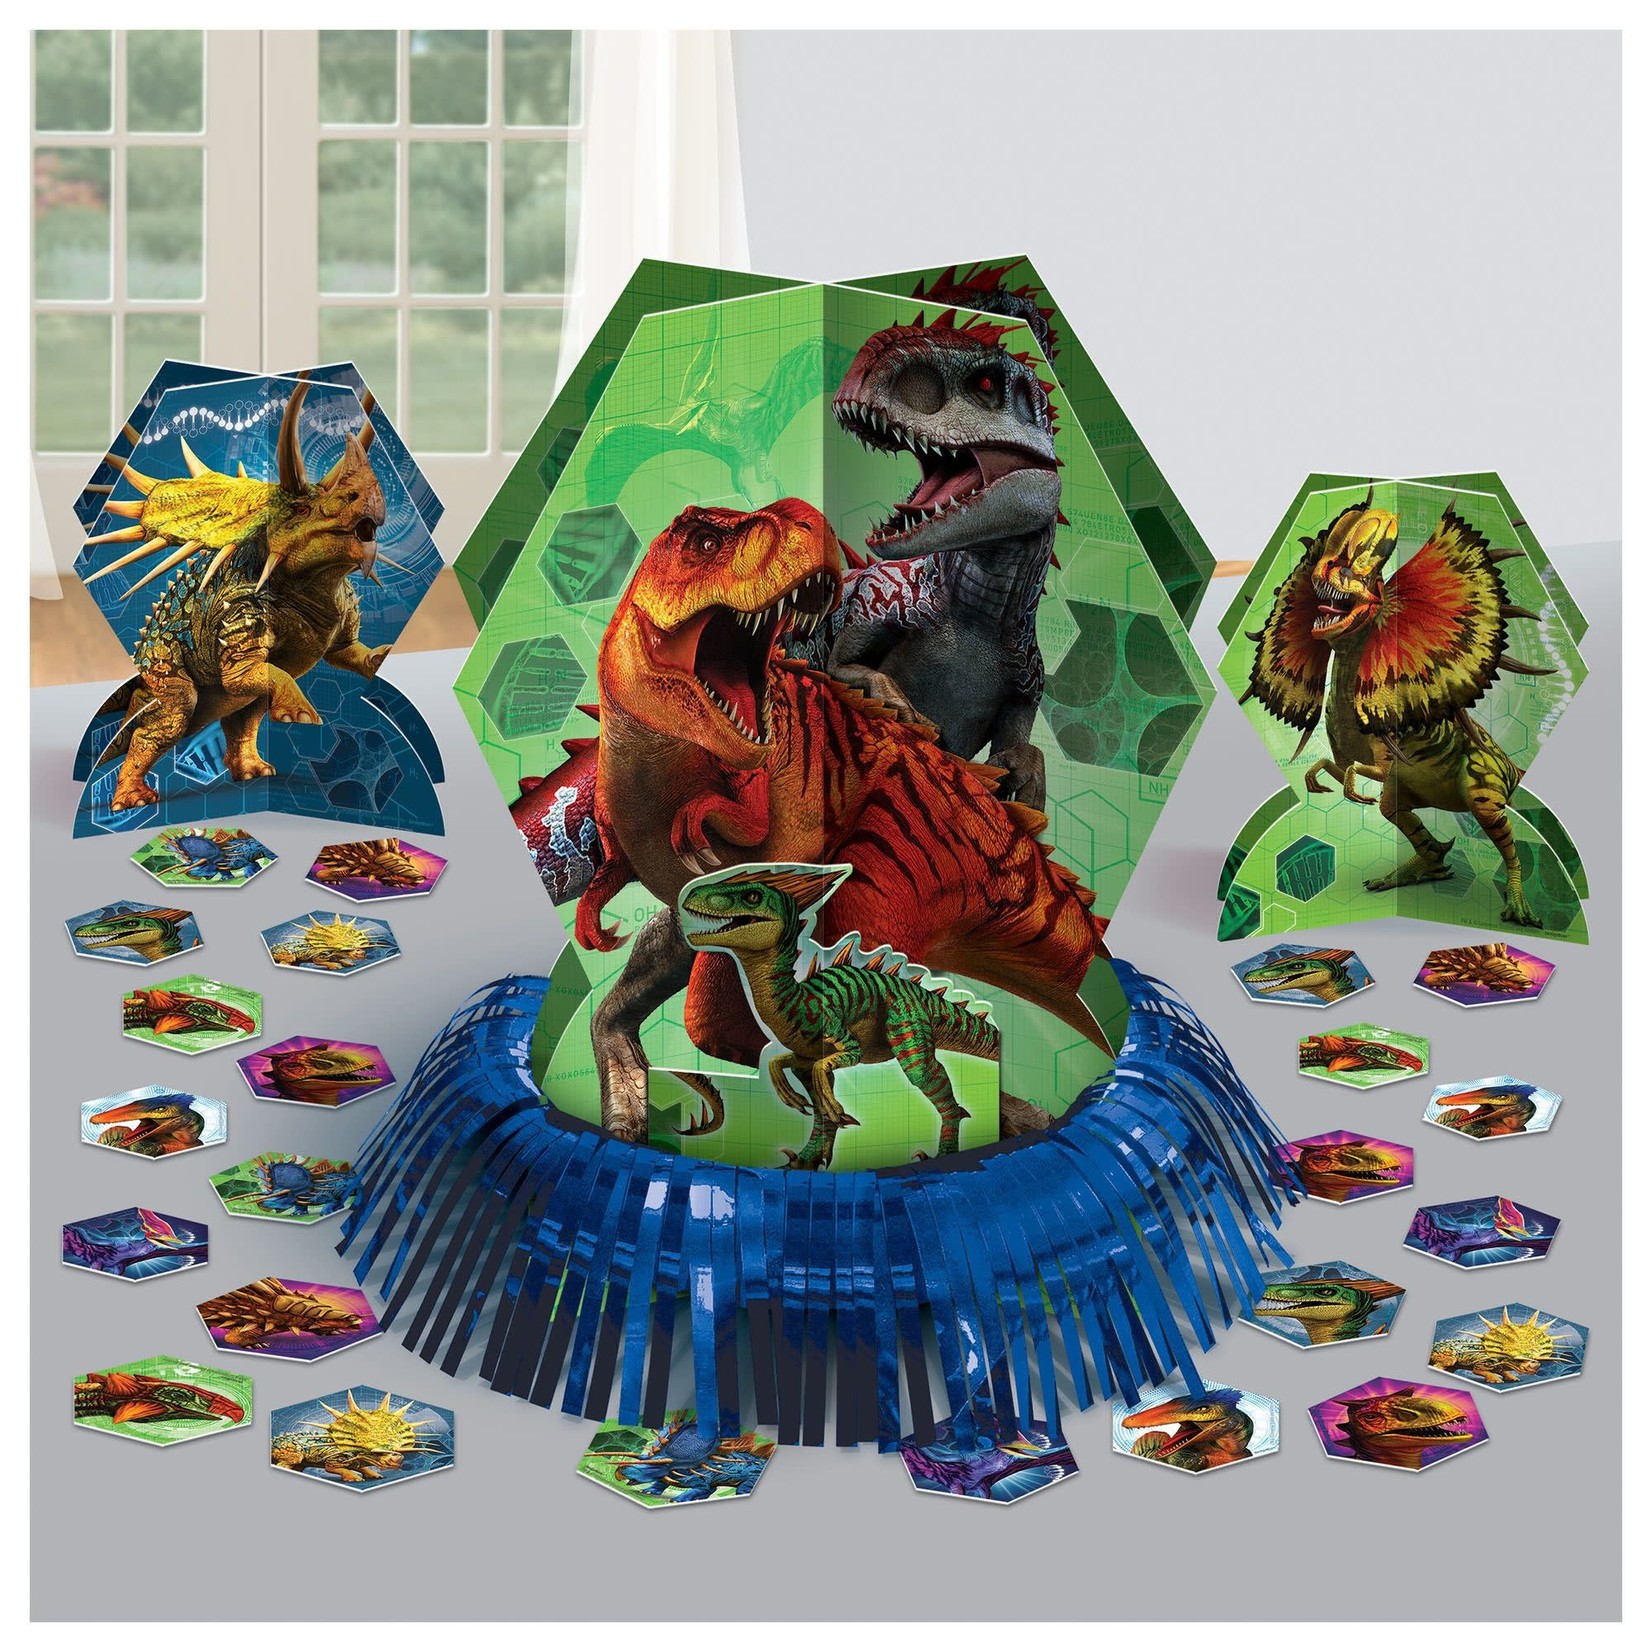 Jurassic World Table Decorating Kit